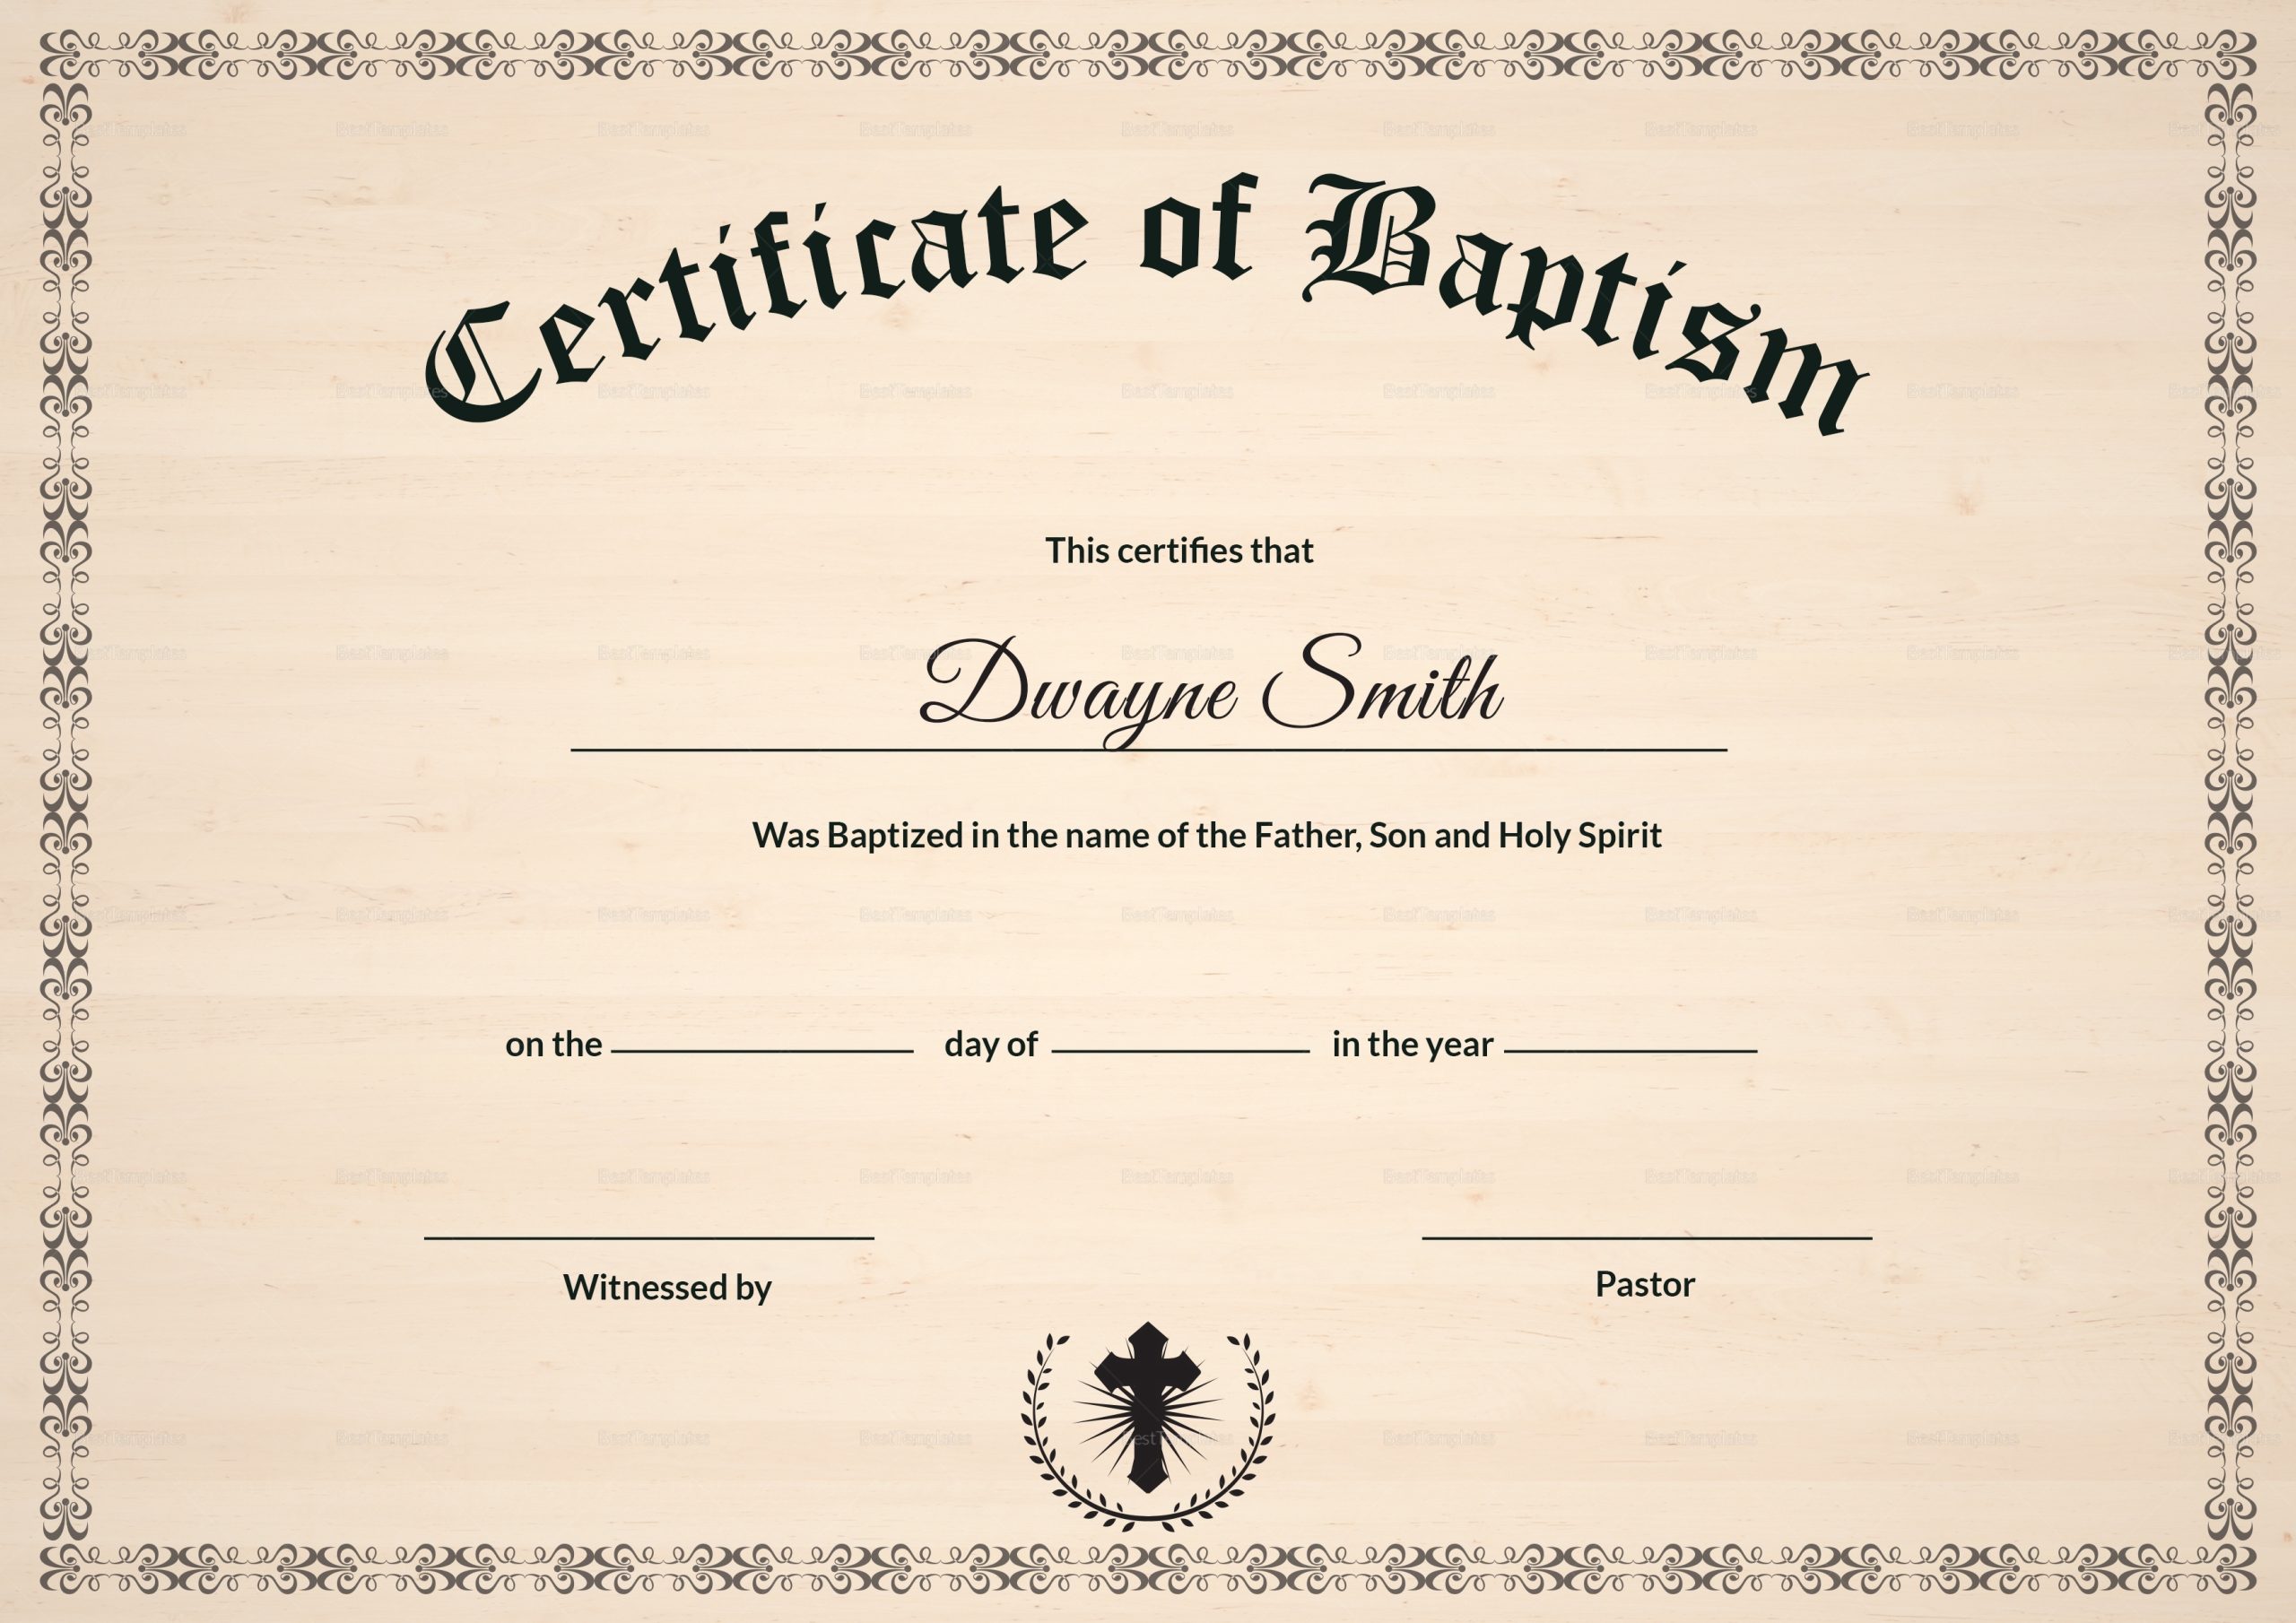 Baptism Certificate Design Template In Psd, Word For Roman Catholic Baptism Certificate Template